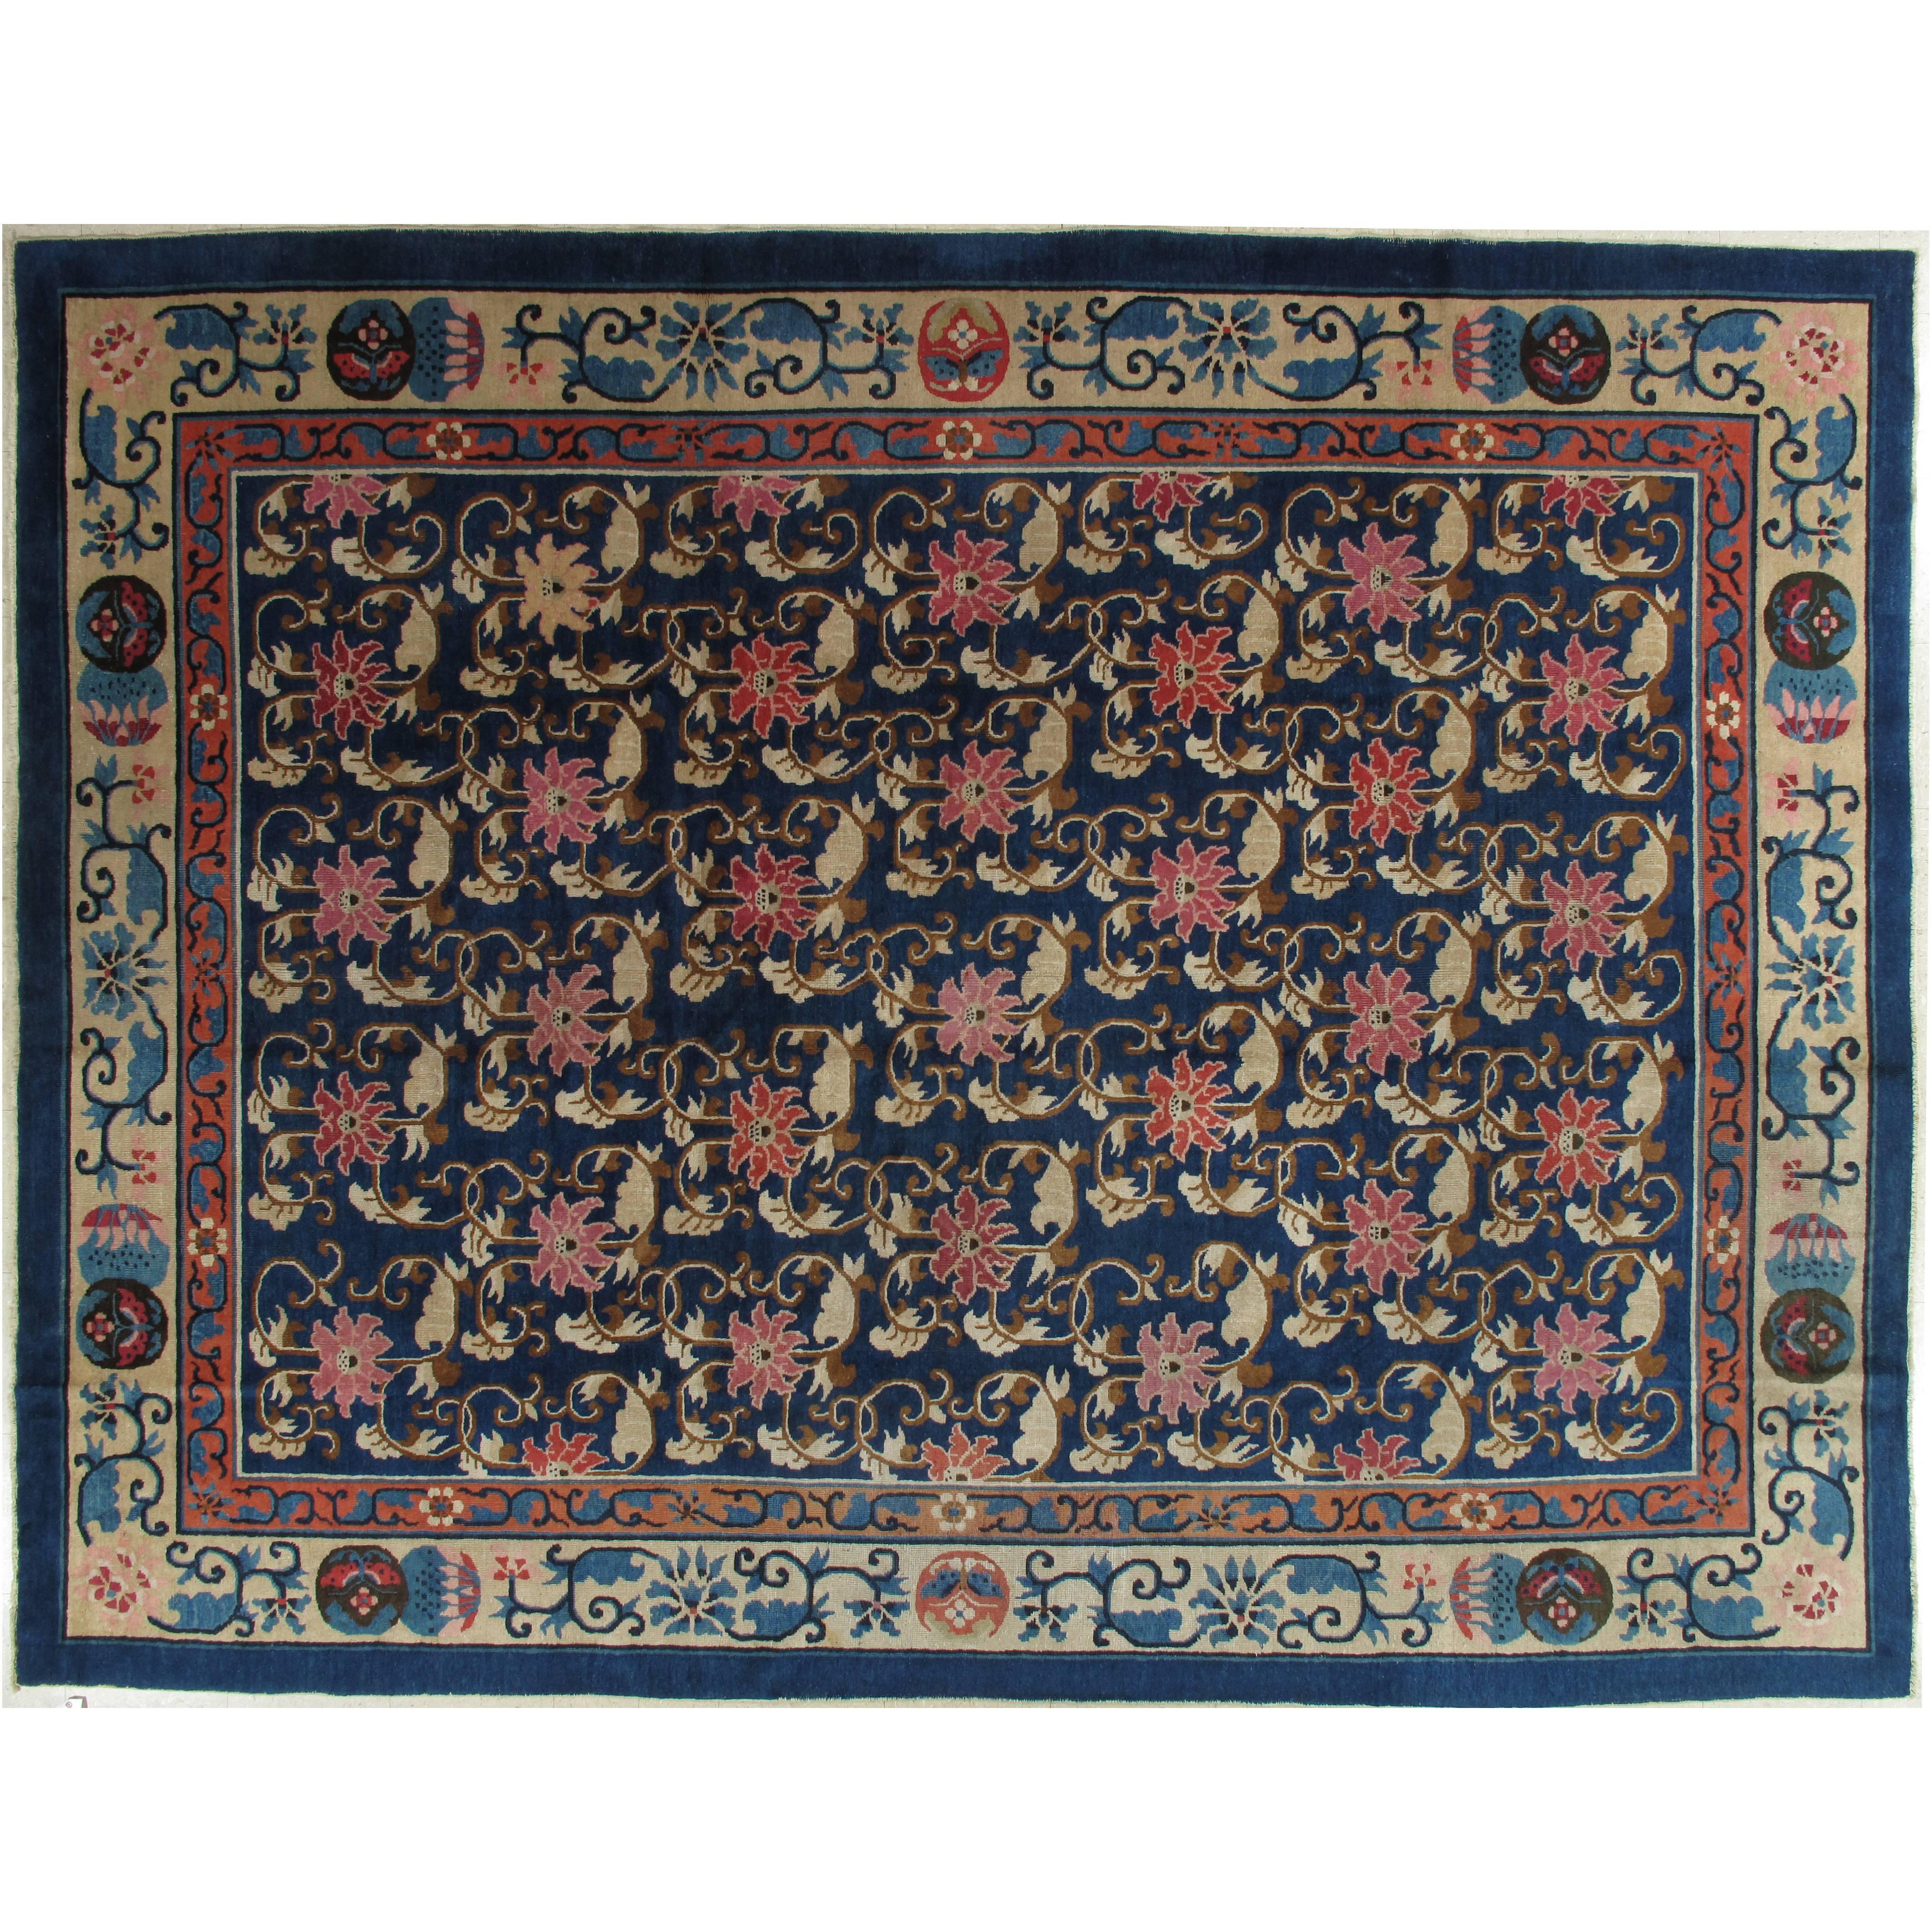 Antique Chinese Carpet, Oriental Rug, Handmade Nice Blue, Beige, Unusual Design For Sale